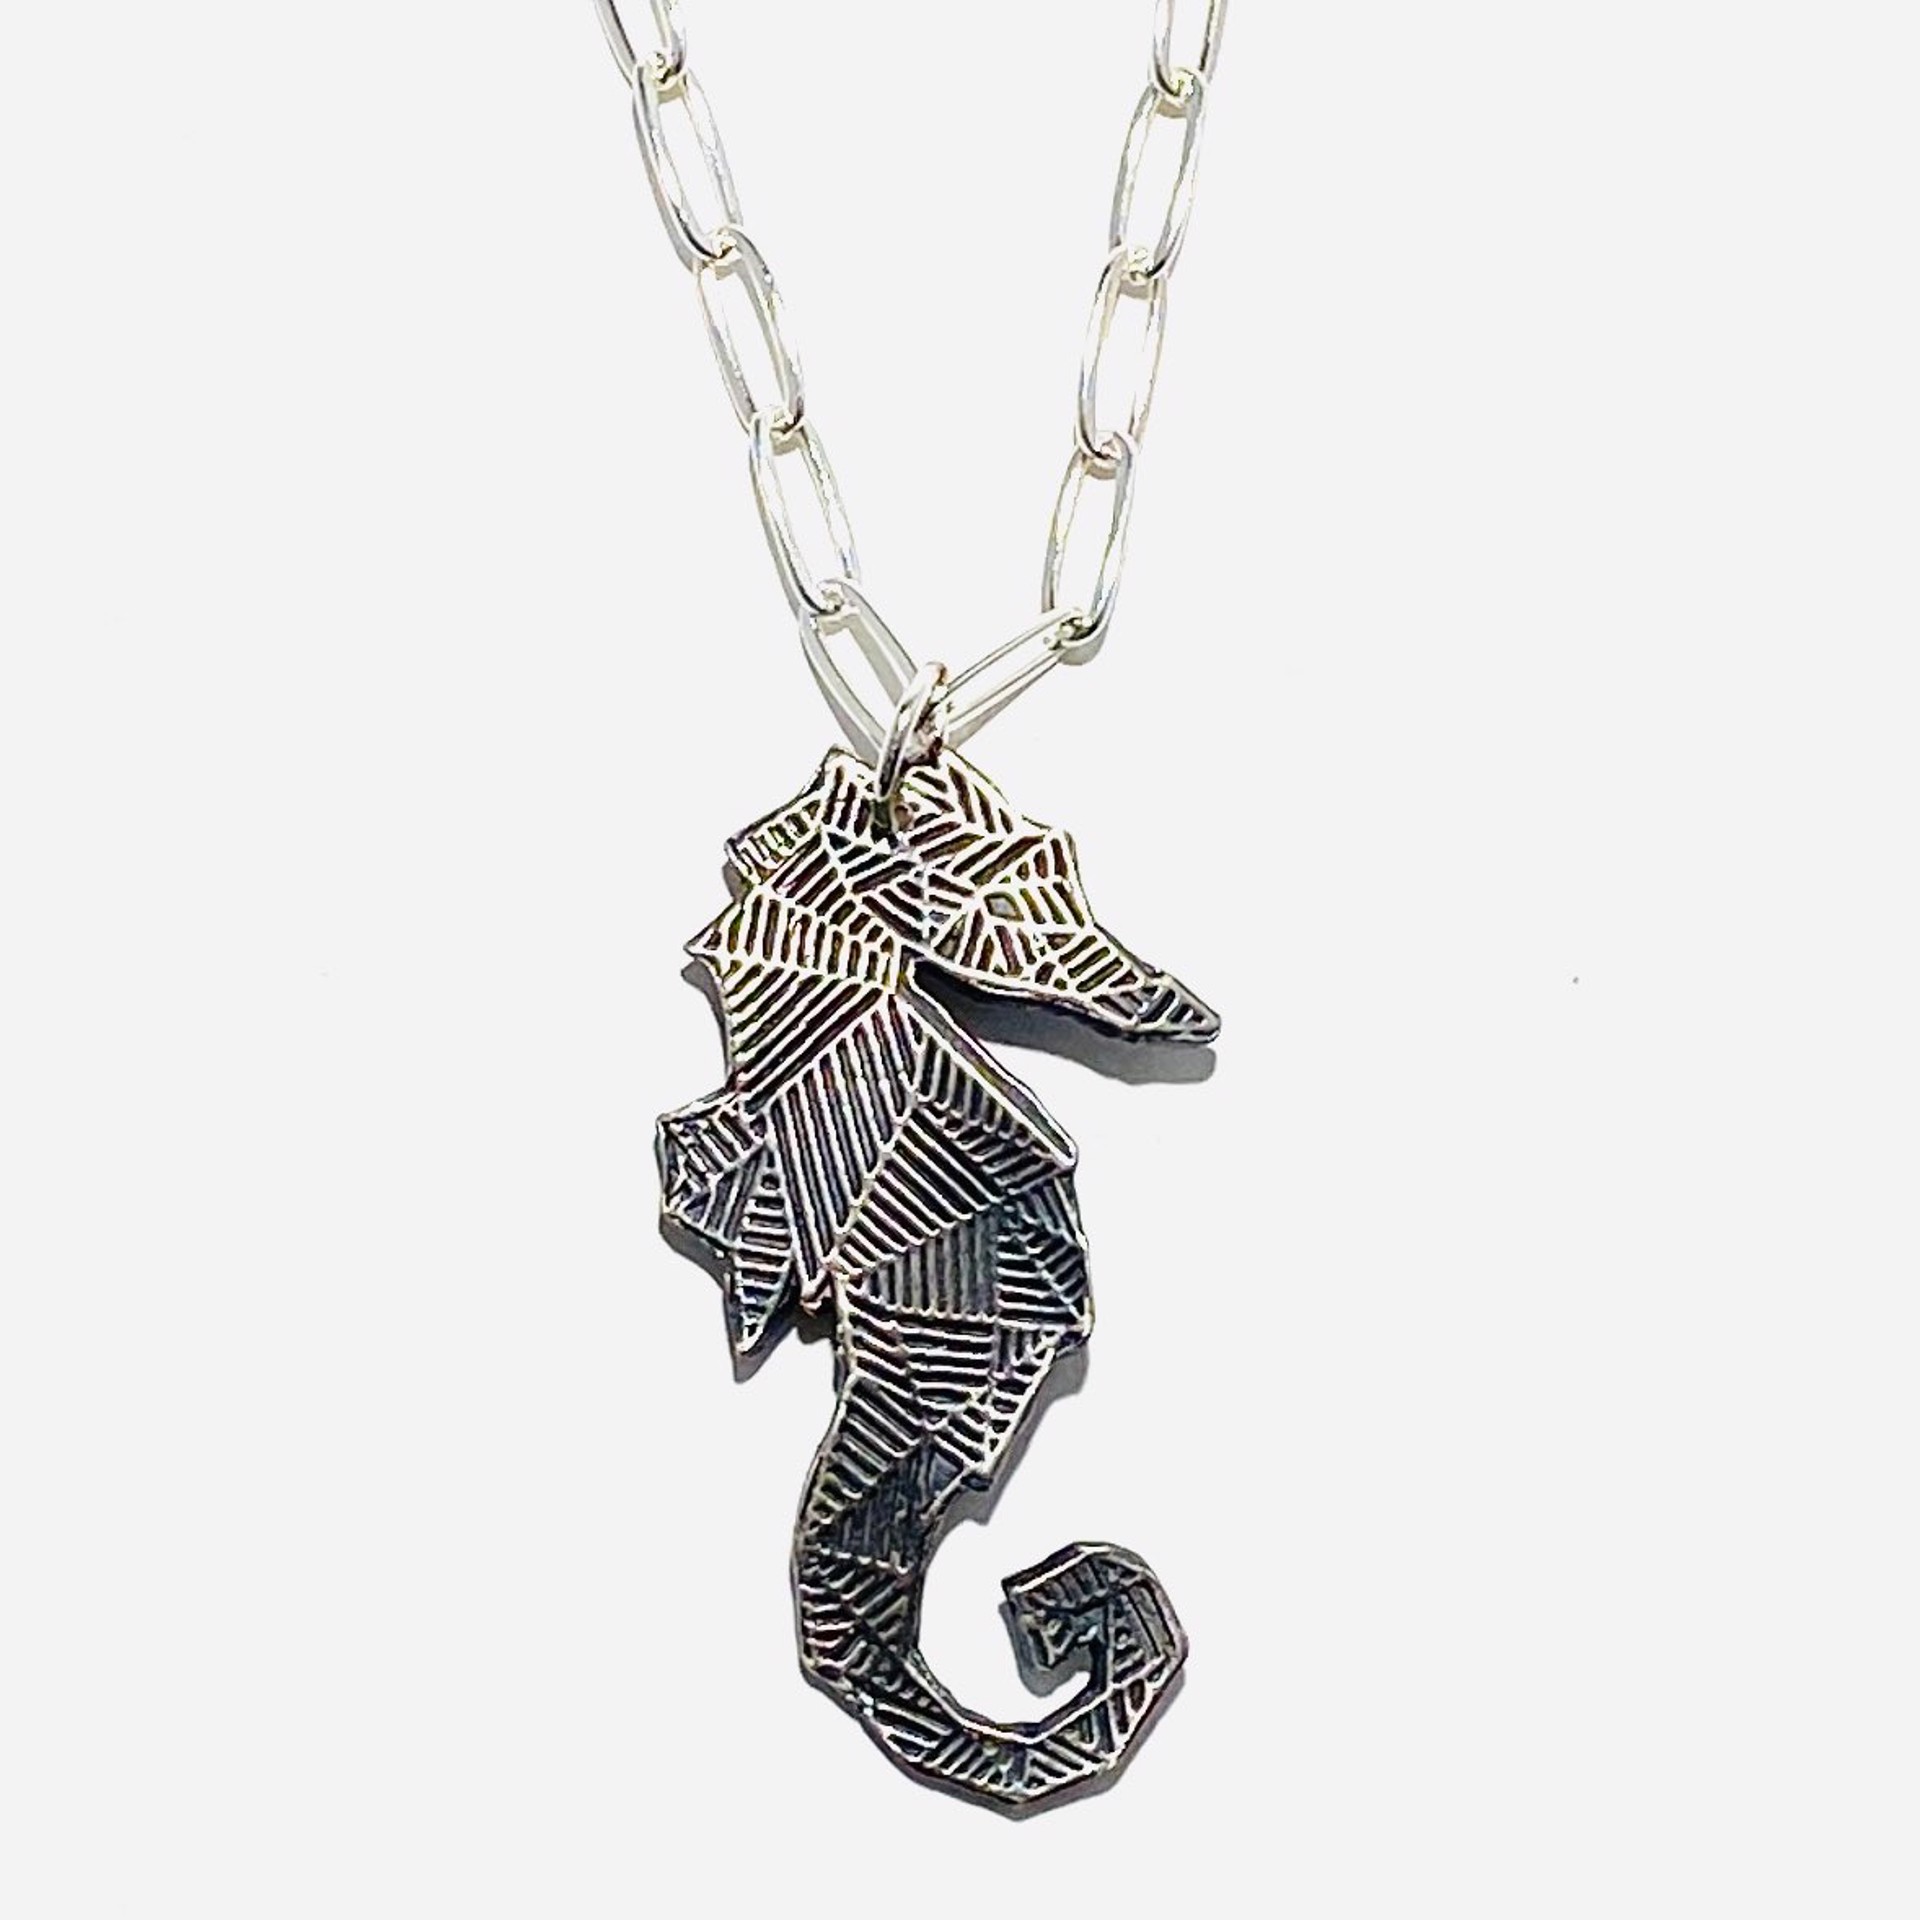 Seahorse Necklace KH23-10 by Karen Hakim